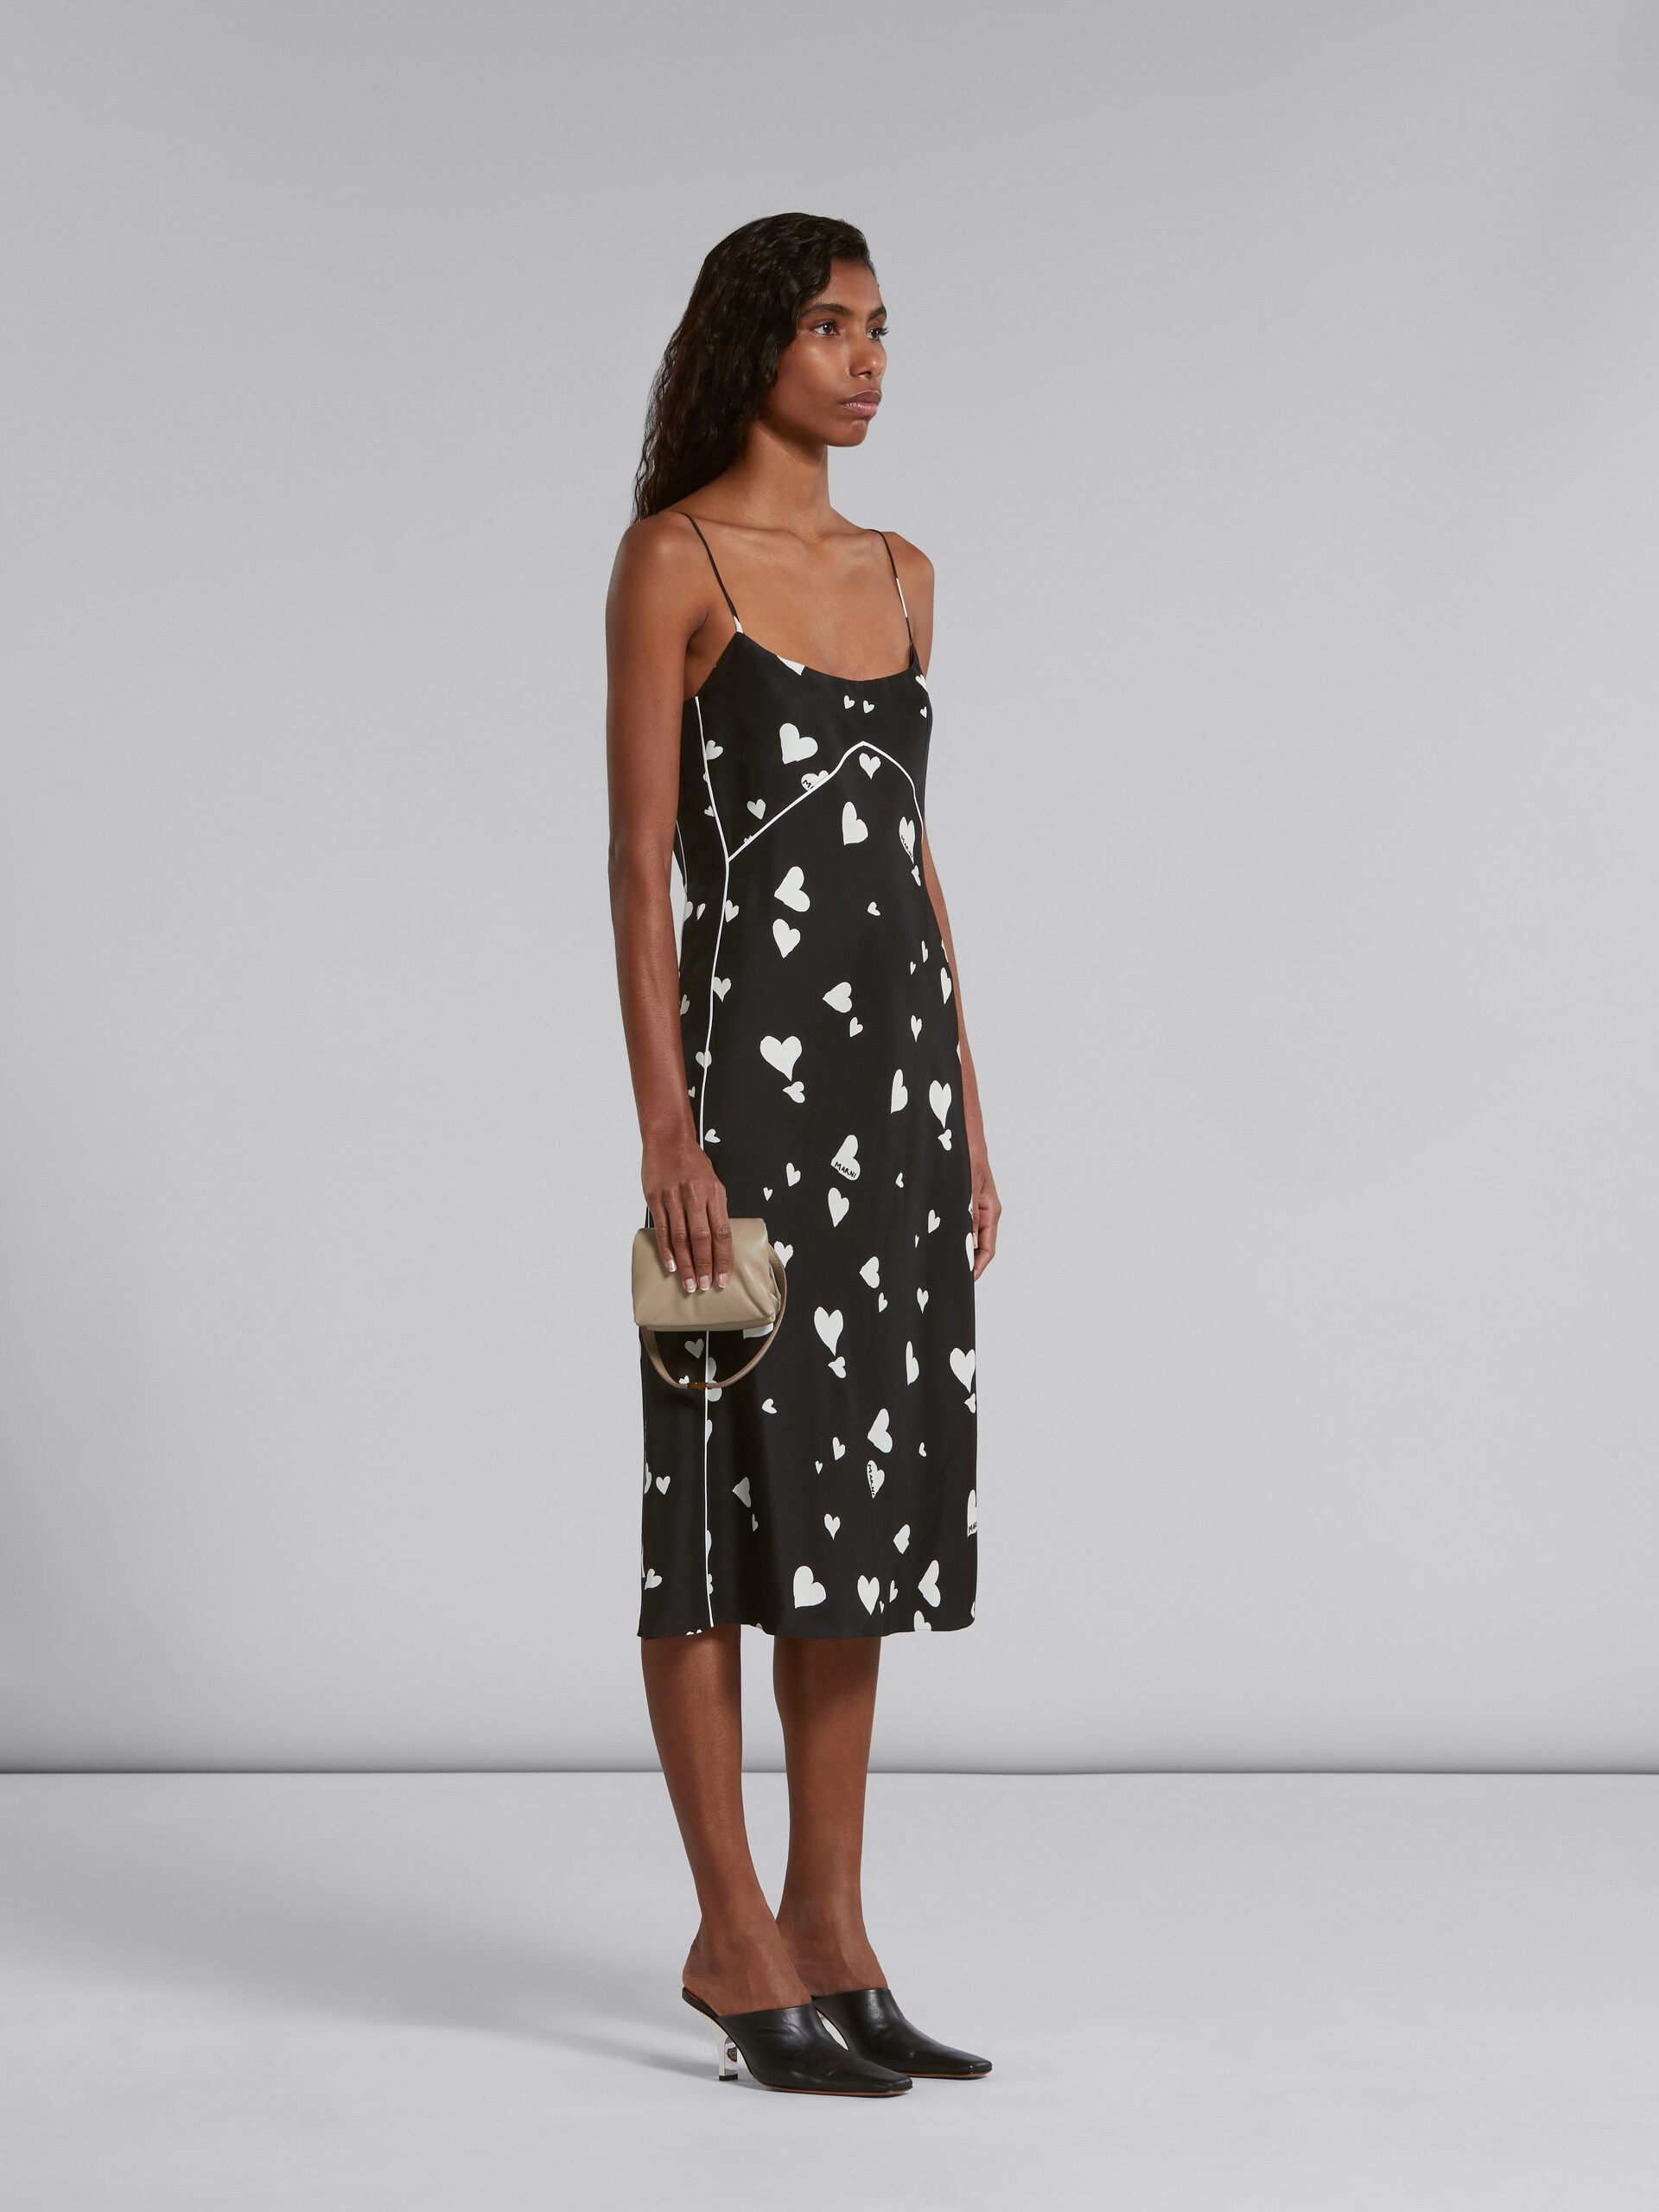 Black silk slip dress with Bunch of Hearts print - Dresses - Image 6